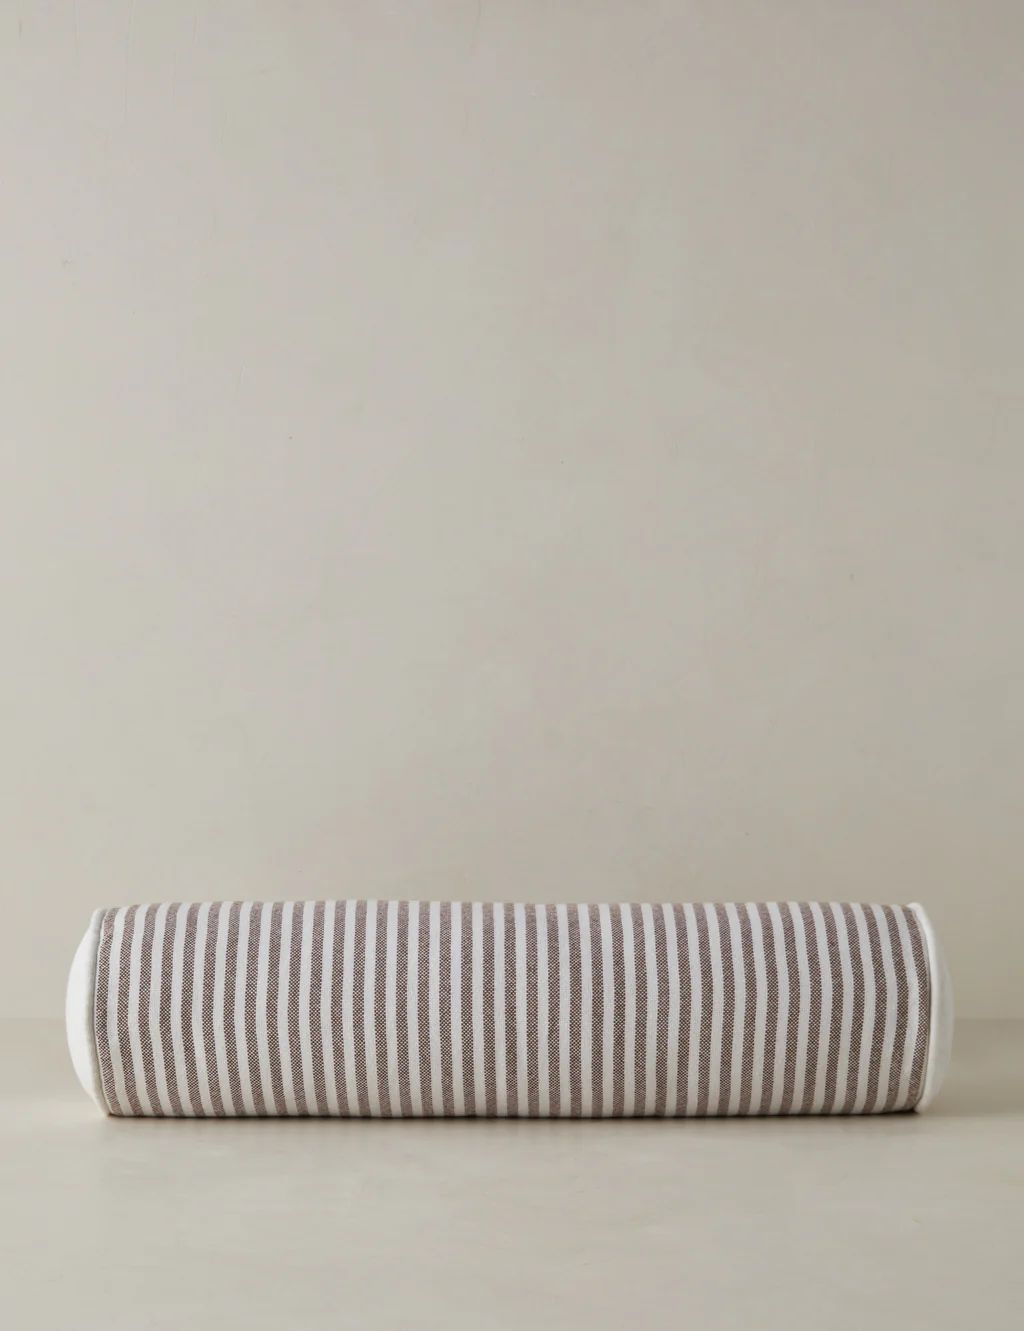 Littu Indoor / Outdoor Striped Bolster Pillow | Lulu and Georgia 